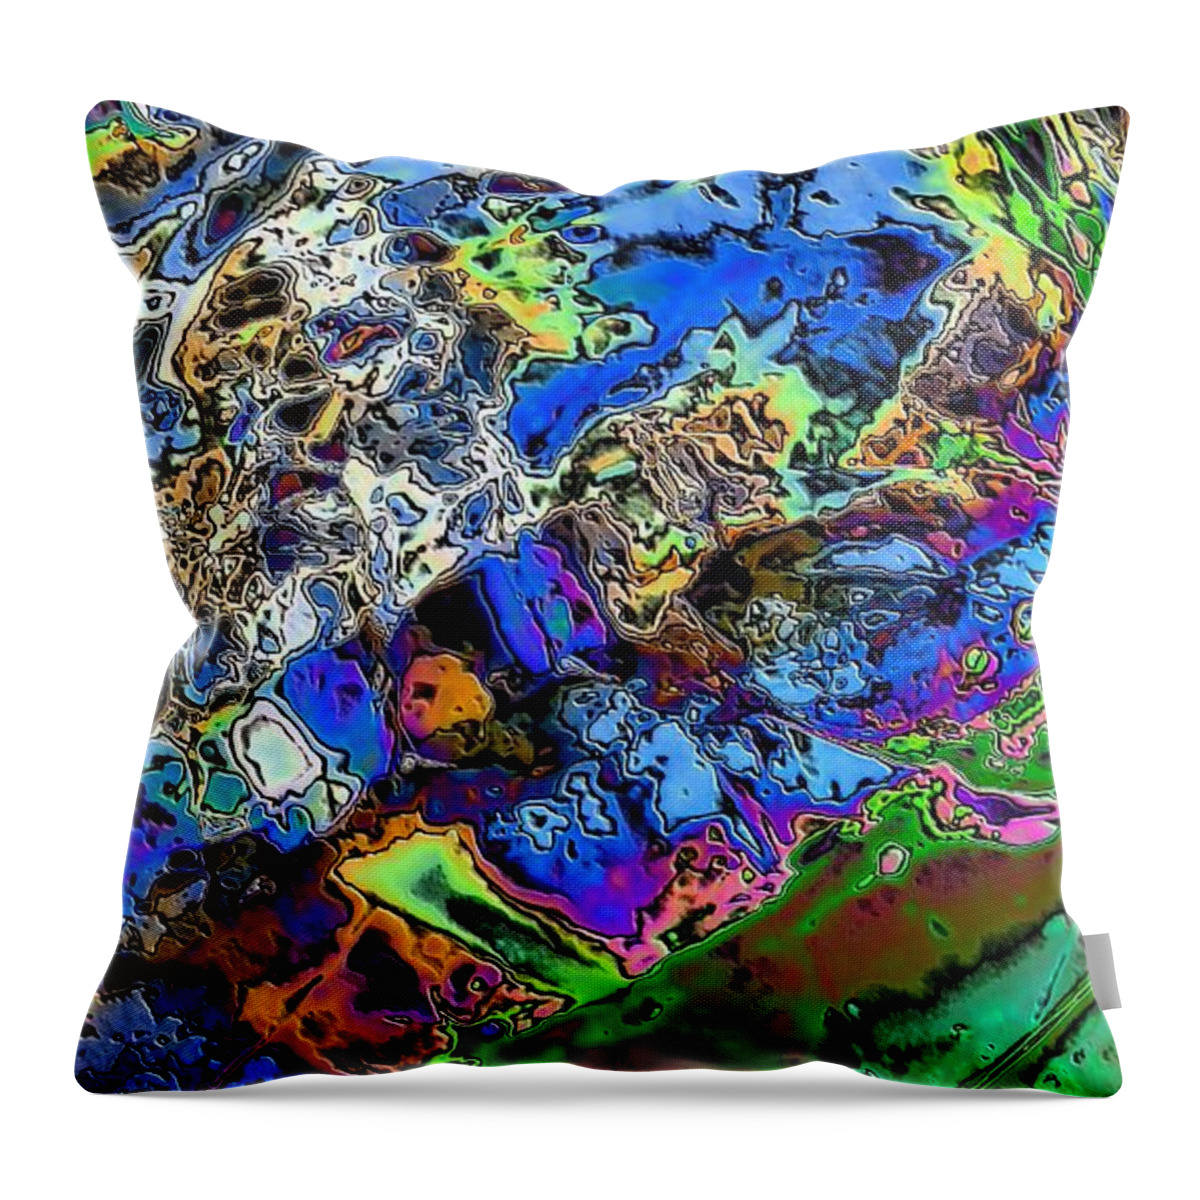 Digital Art Throw Pillow featuring the digital art Abstract #53 by Belinda Cox